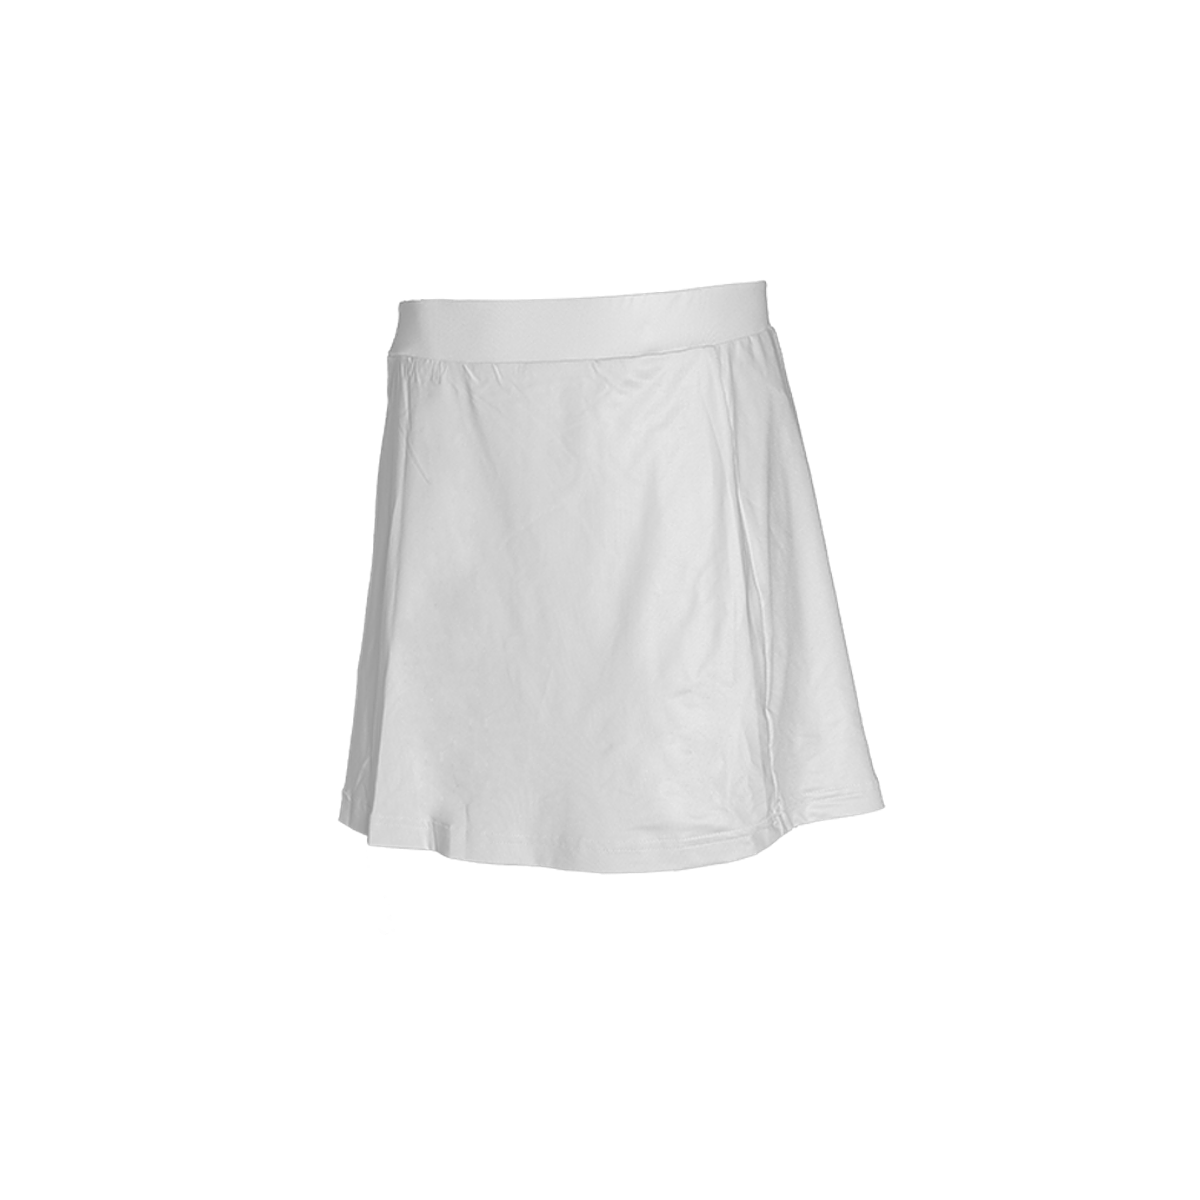 Short saia de beach tennis Heroe's Branco